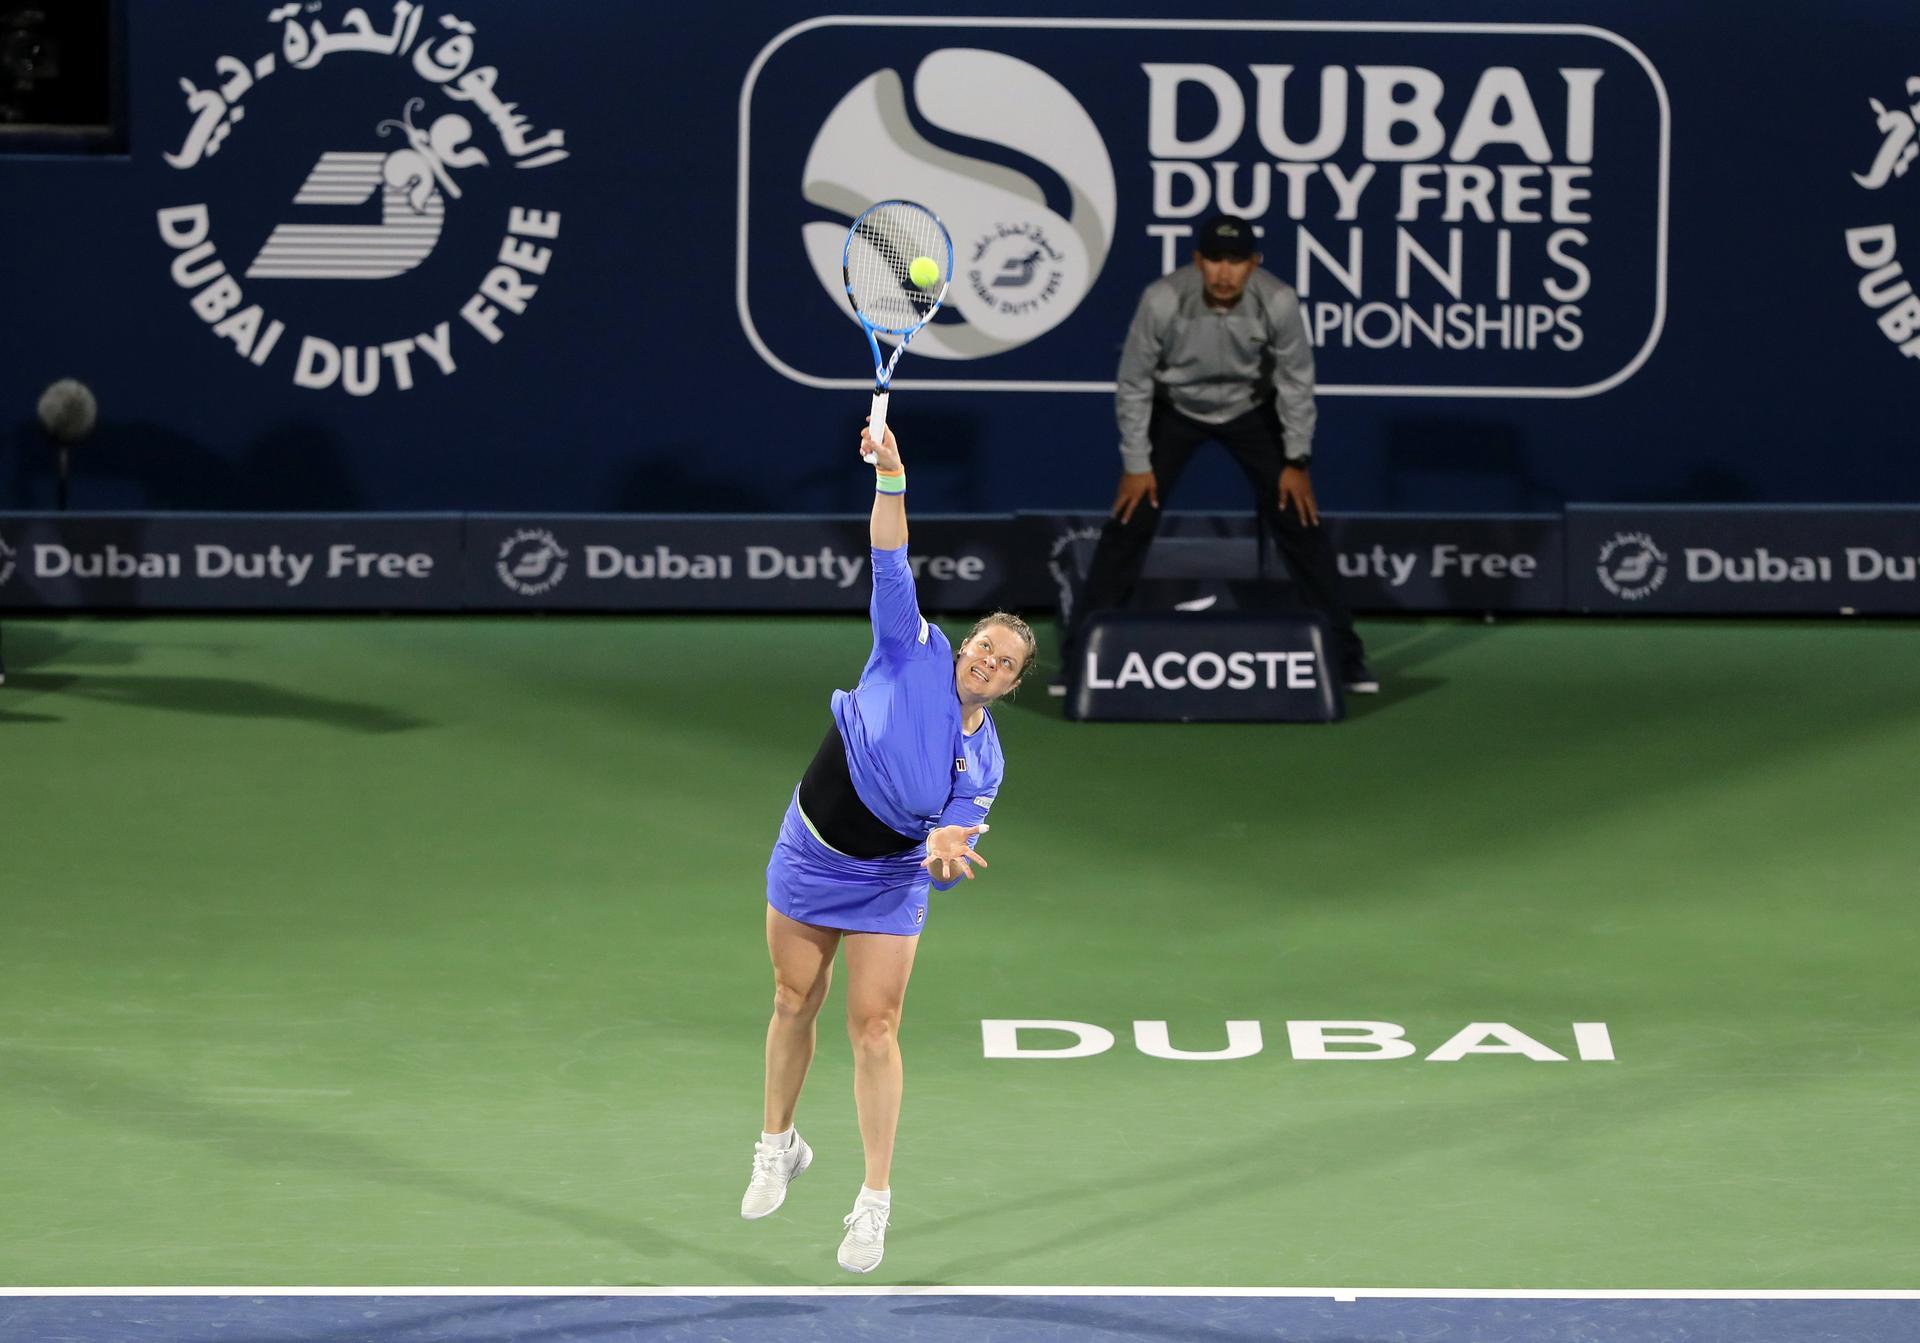 Ons Jabeur Tennis - Dubai Tennis Championships 2020 - Dubai - WTA - Dubai  Duty Free Tennis Stadium - United Arab Emirates - 2020